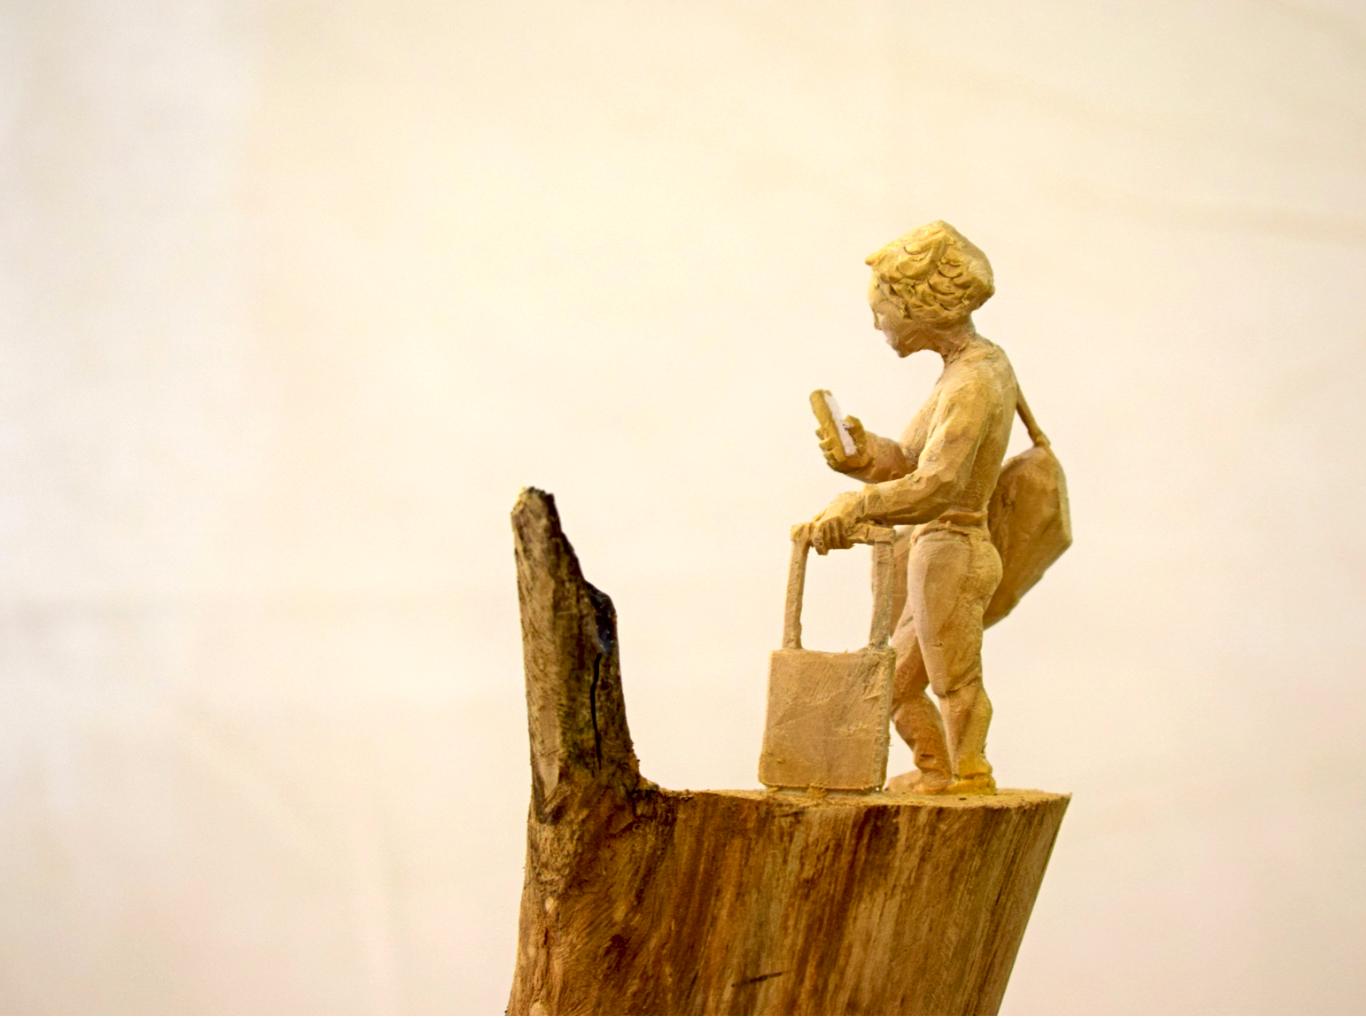 Communication - Wood sculpture, figurative sculpture, wood carving 3